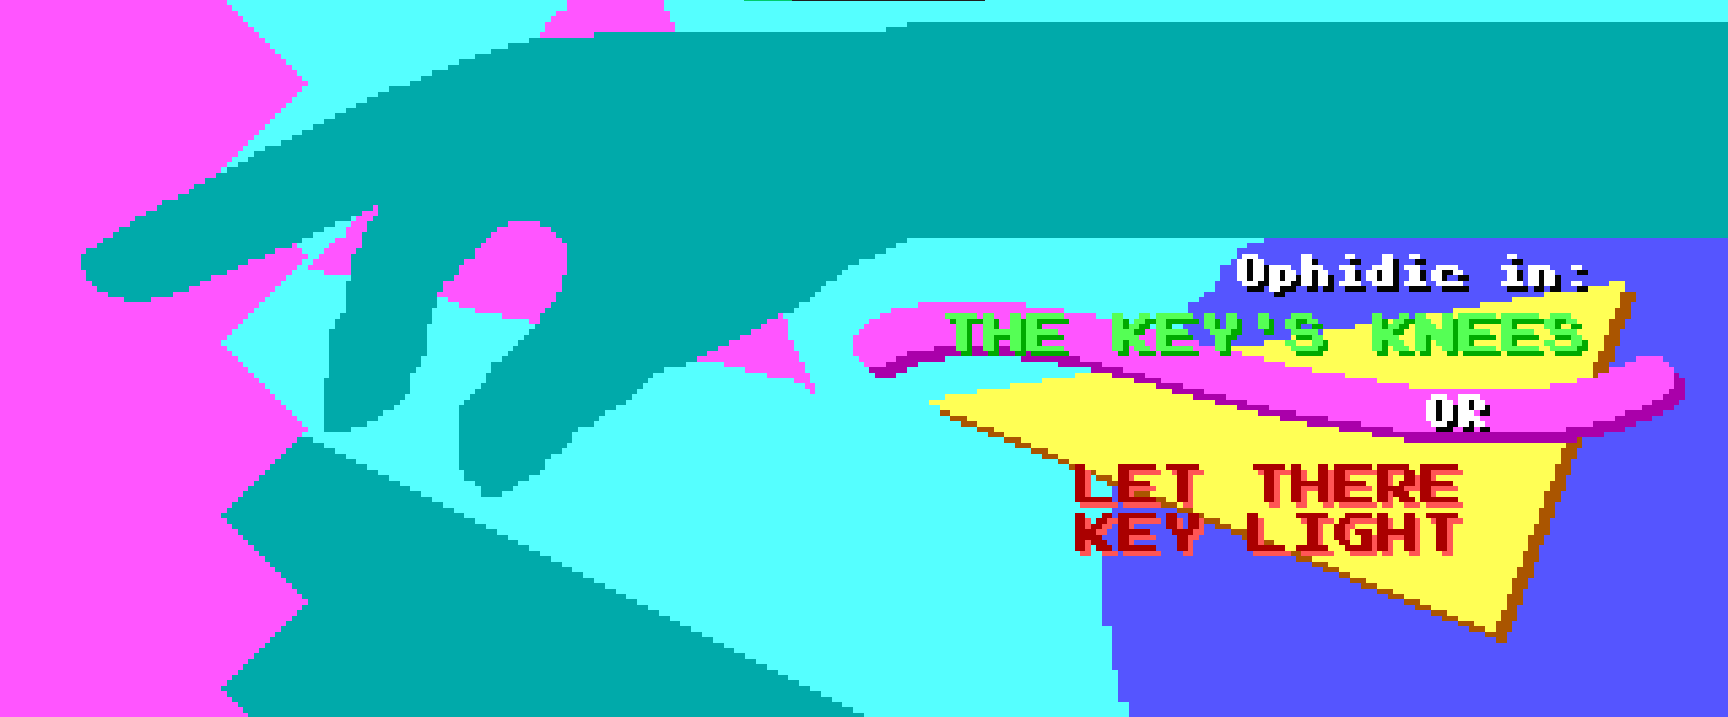 The Key's Knees